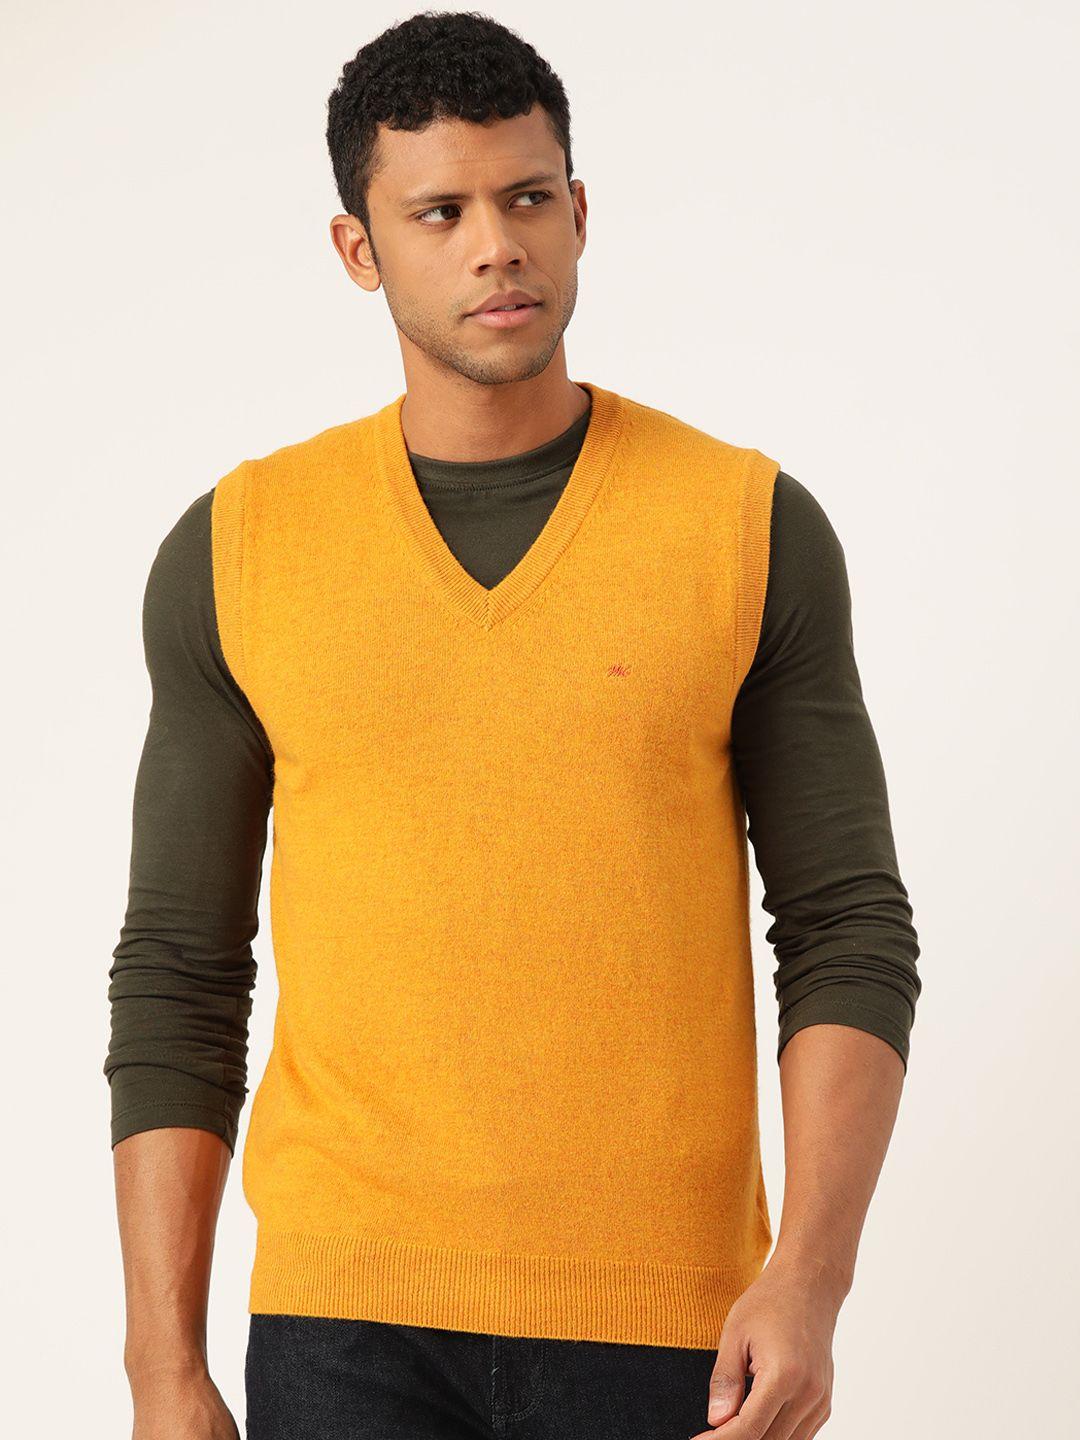 monte carlo basic v-neck sweater vest